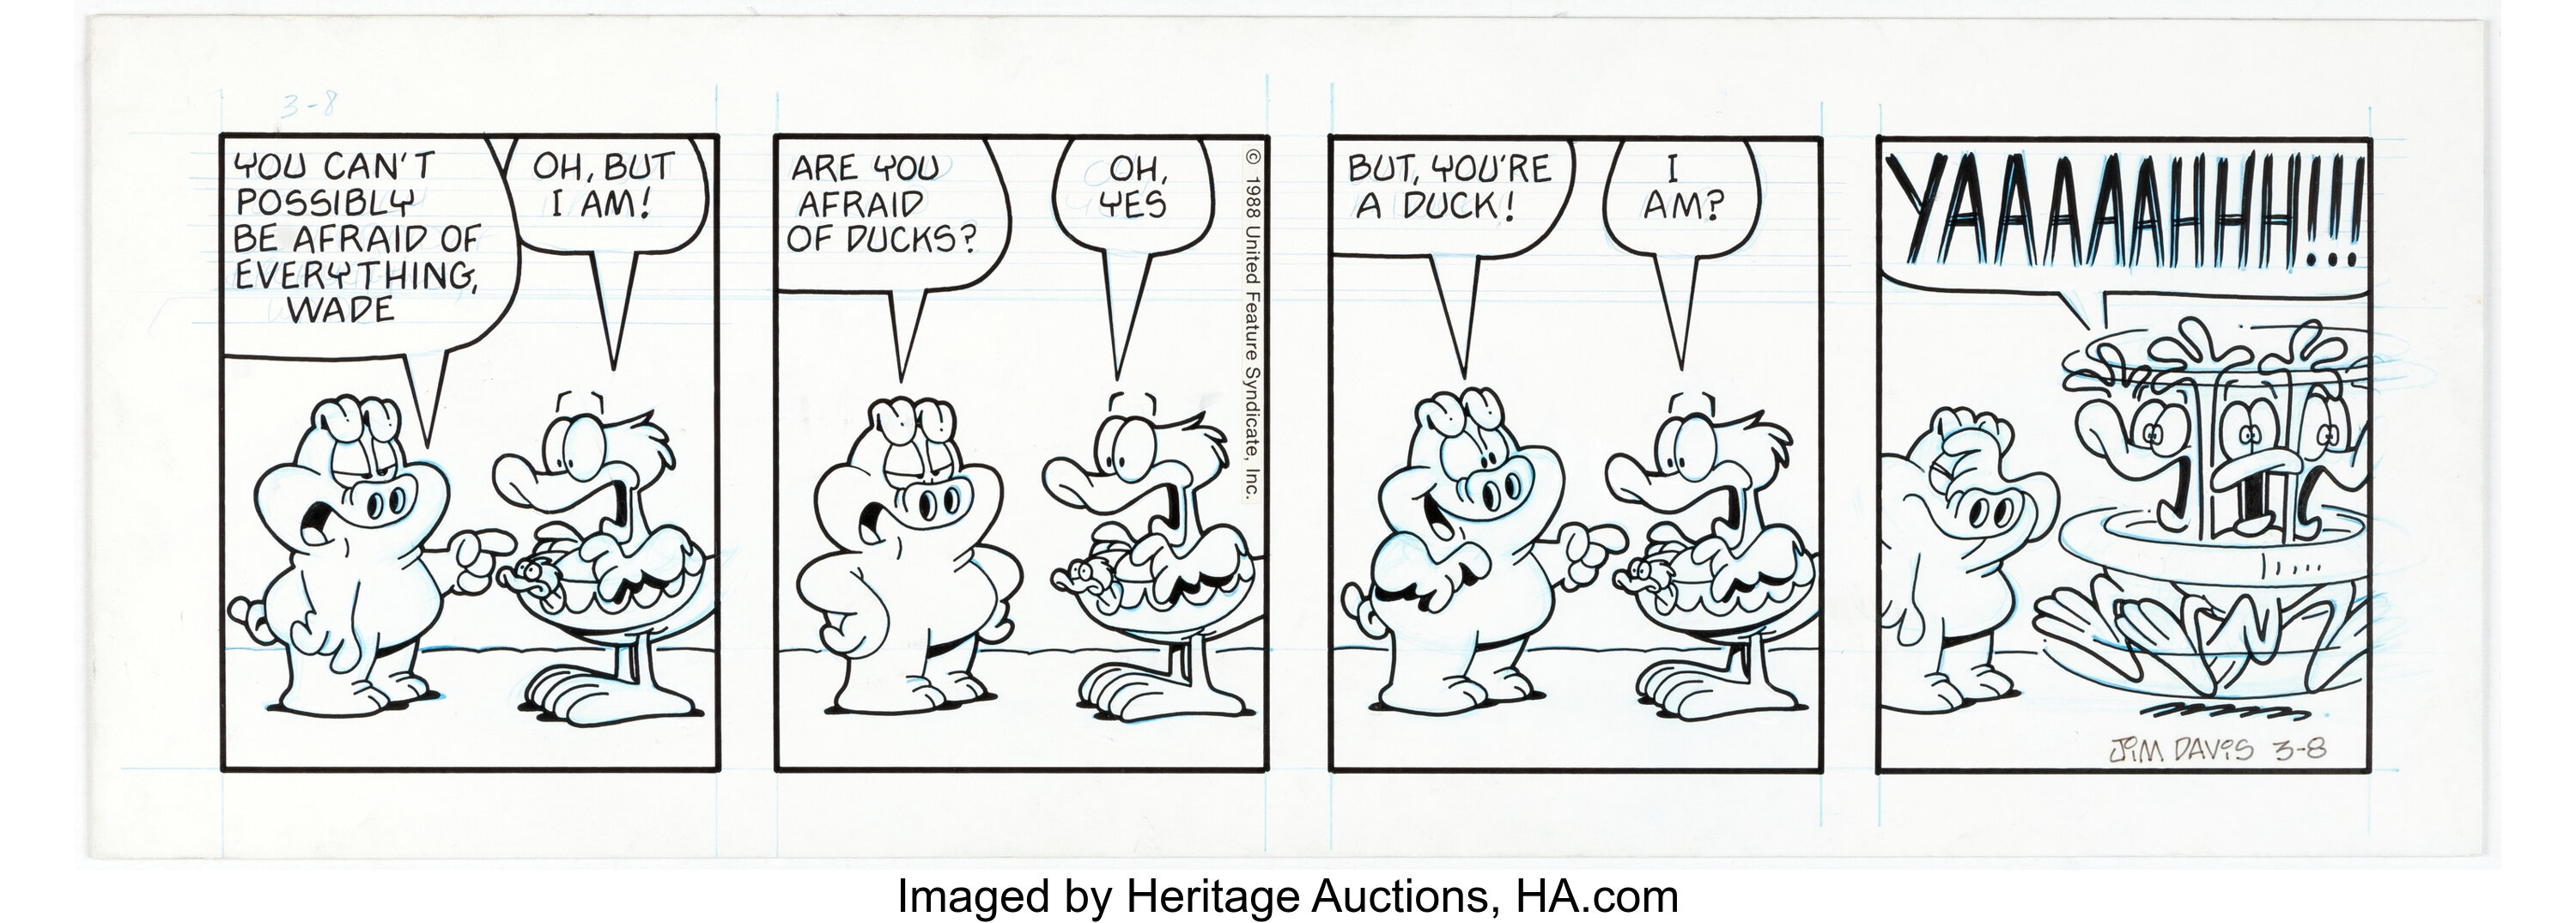 Jim Davis Us Acres Daily Comic Strip Original Art Dated 3 8 88 Lot 15039 Heritage Auctions